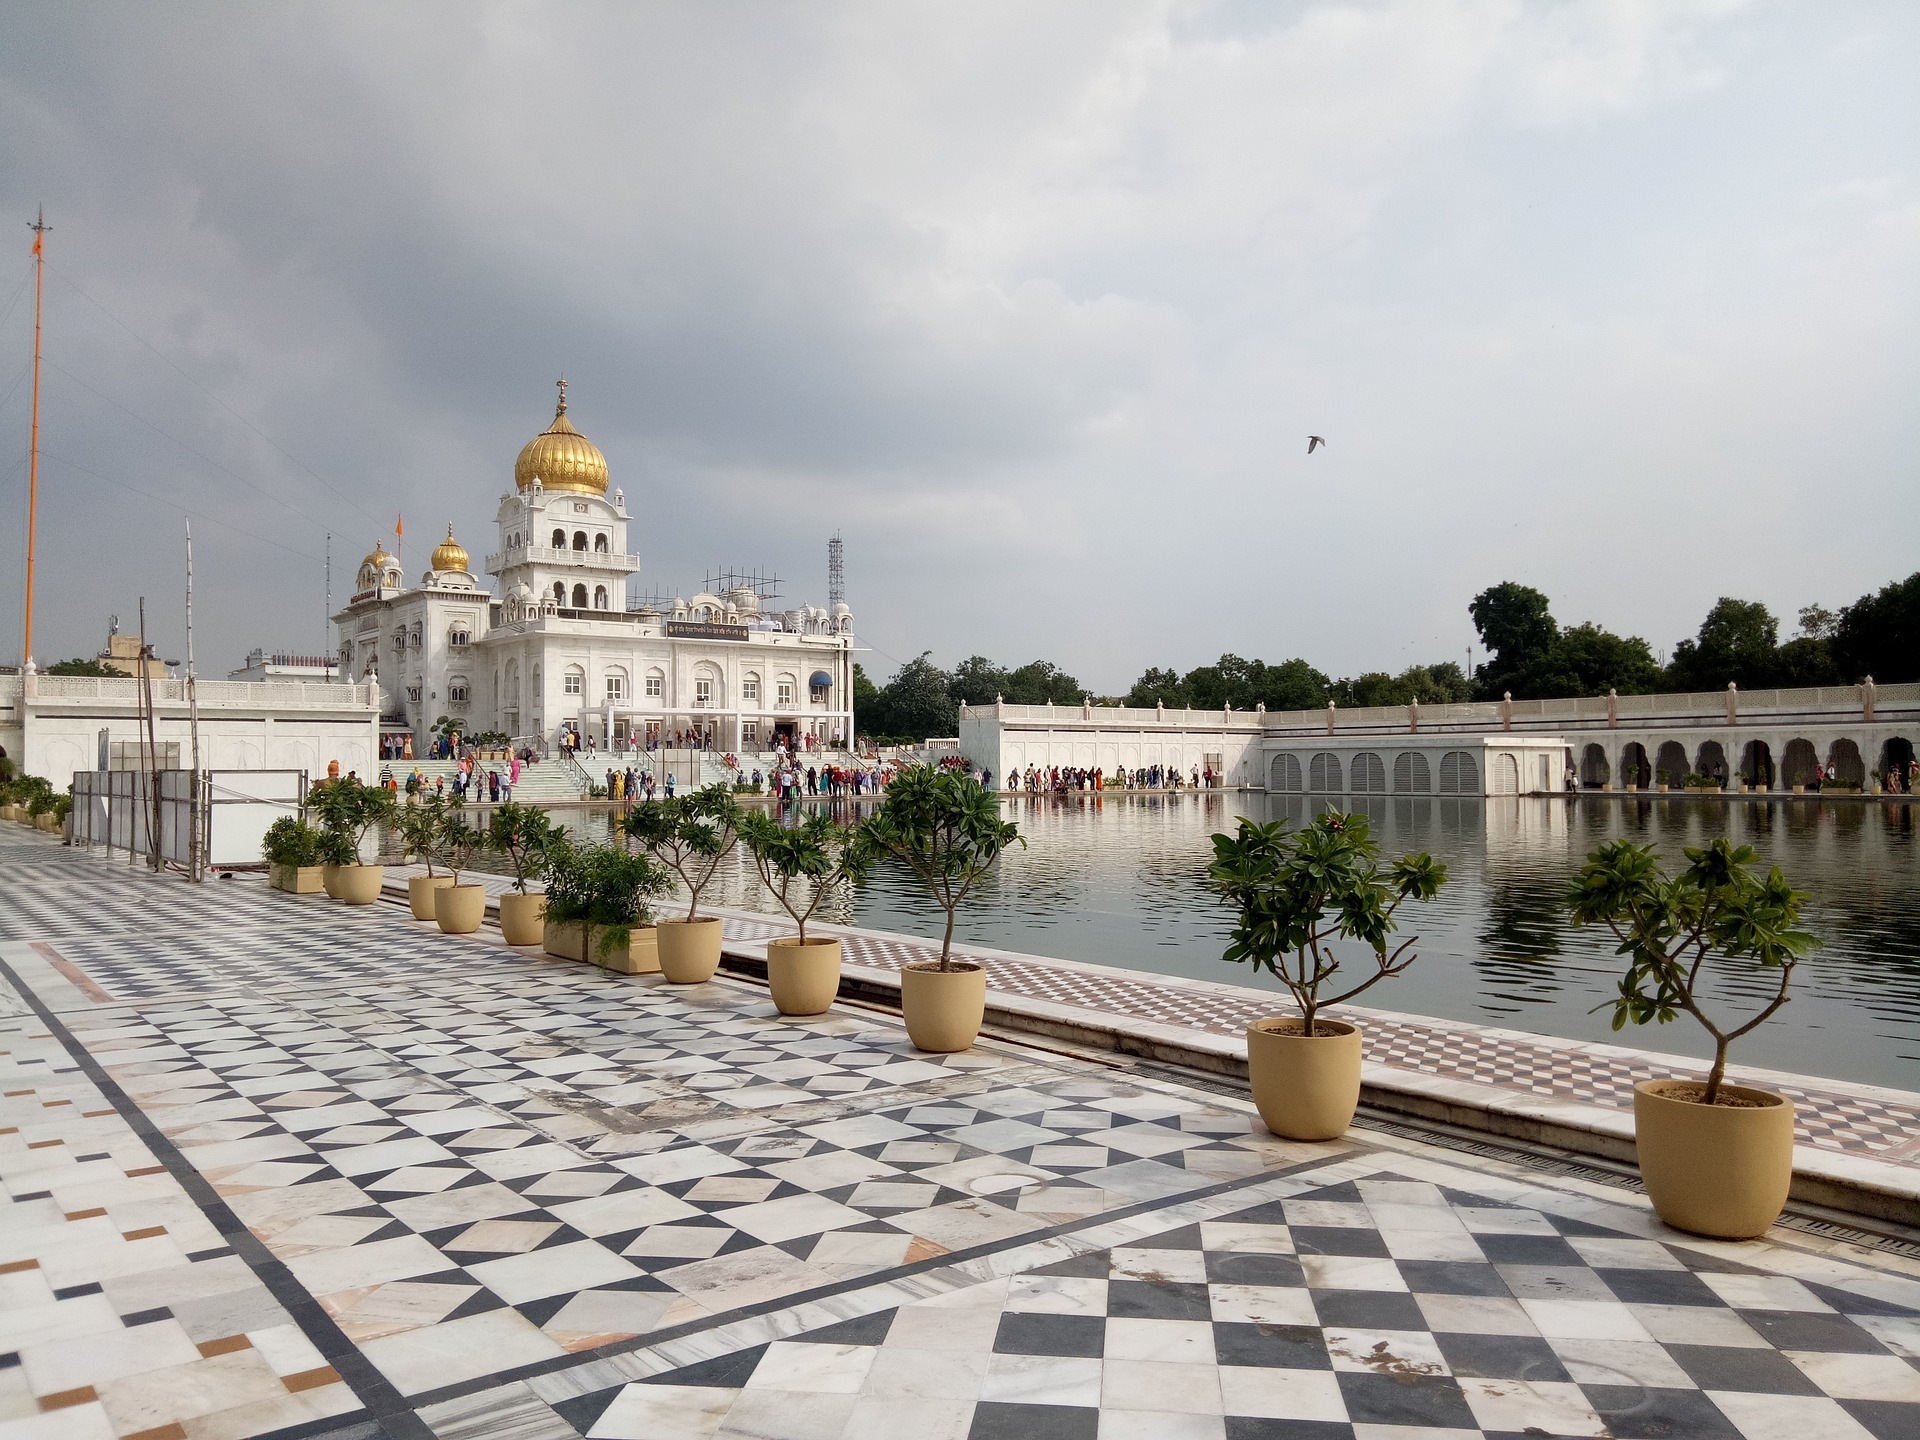 Delhi Gurudwara Tour: Discover the Spiritual Splendor of Sikhism in the Capital City